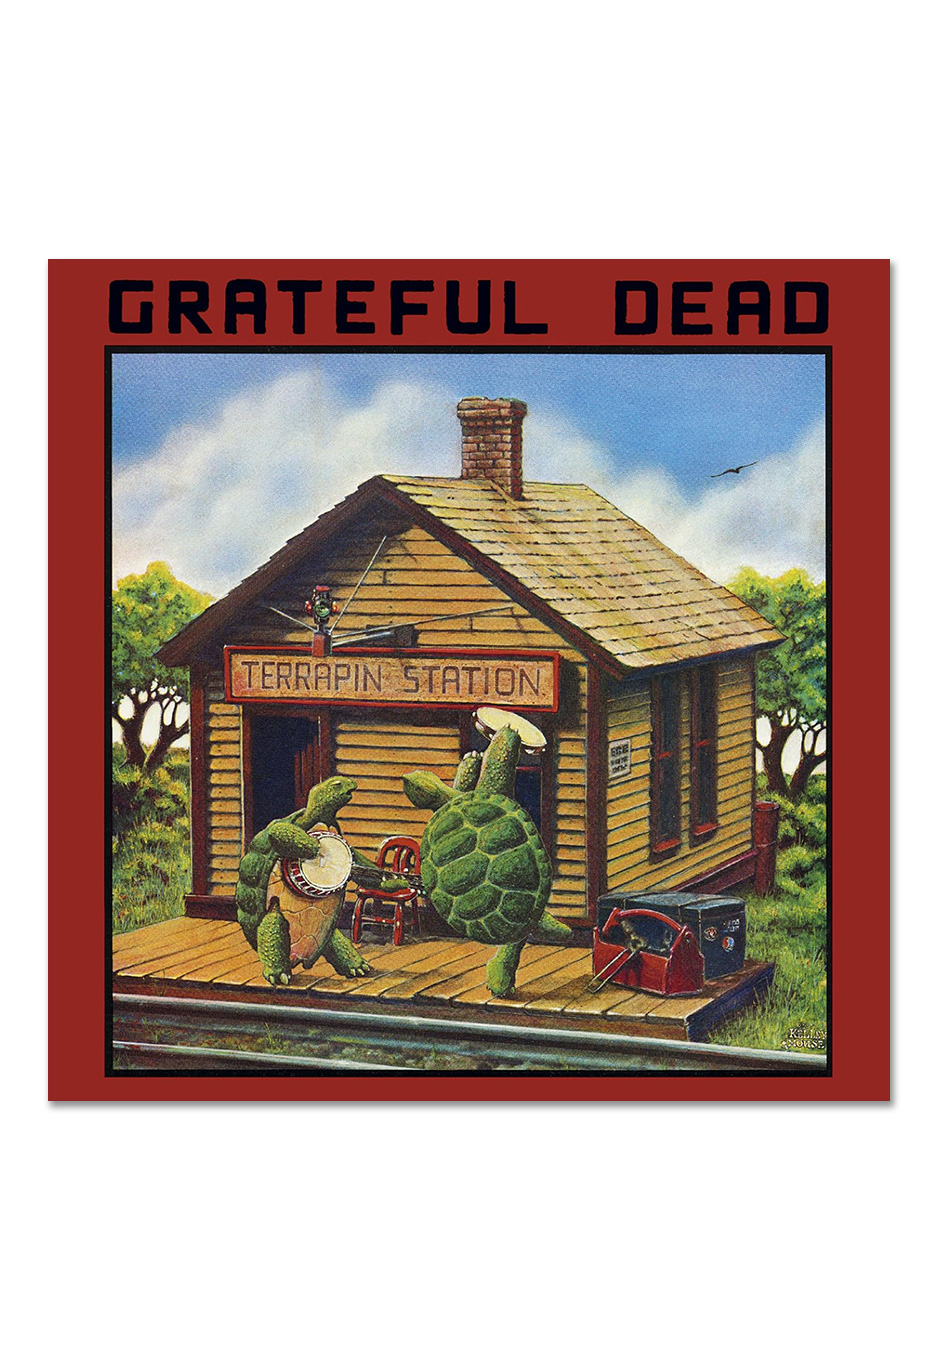 Grateful Dead - Terrapin Station Ltd. Emerald Green - Colored Vinyl